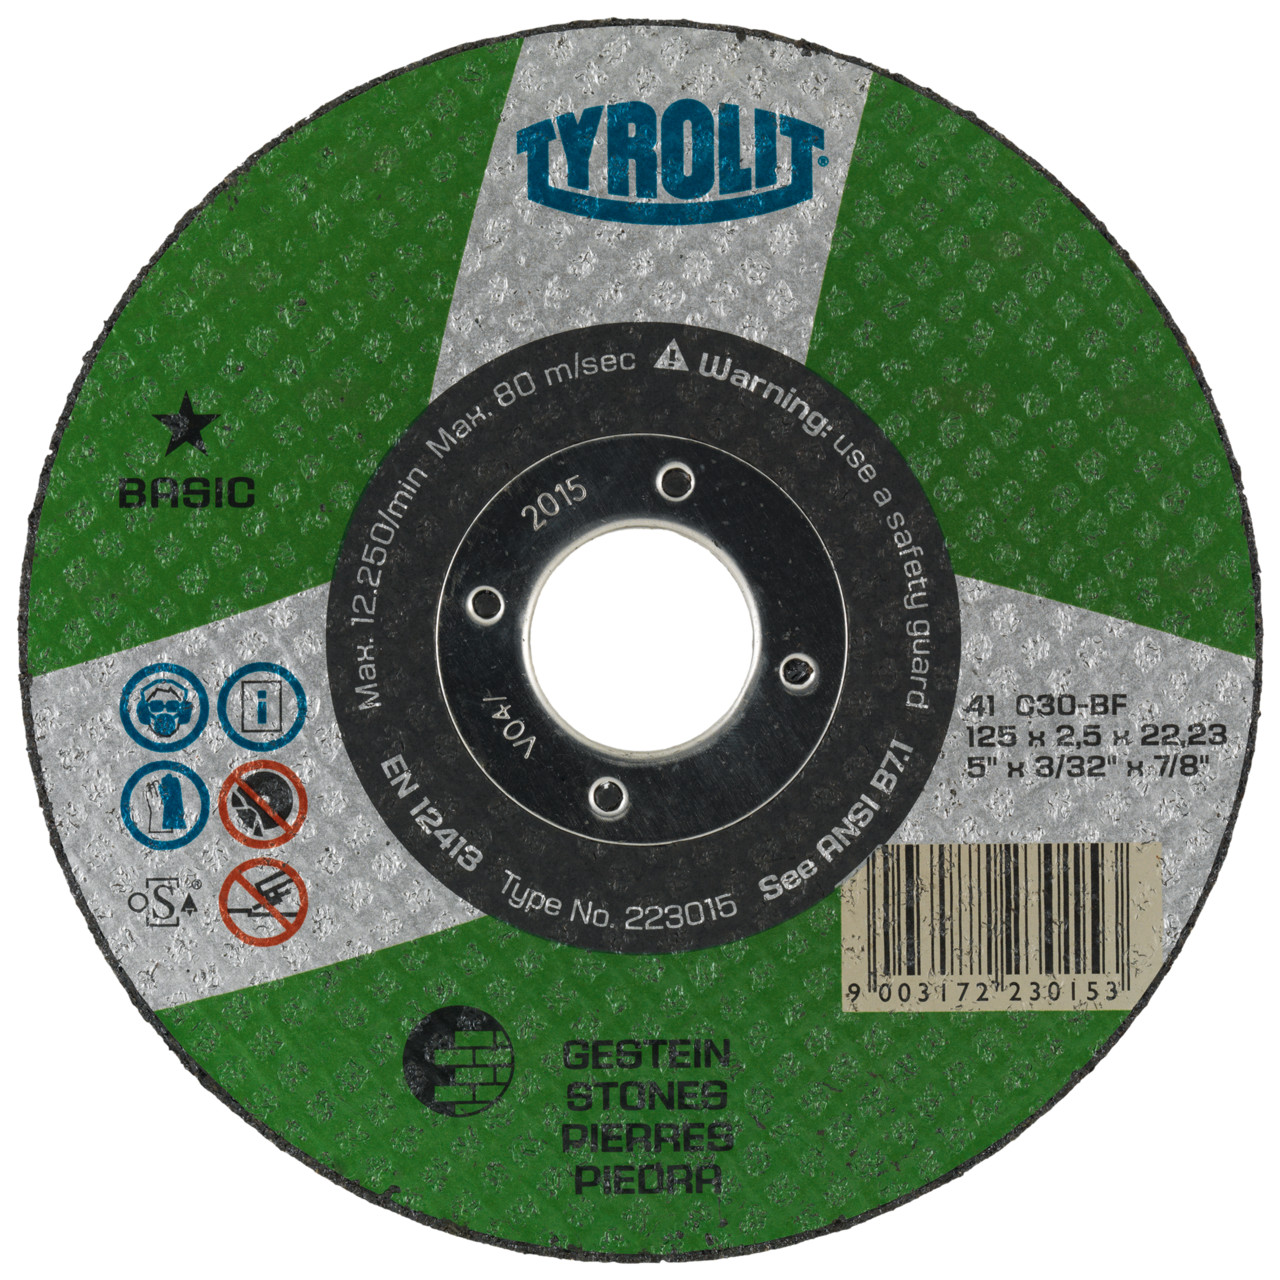 Tyrolit Cutting discs DxDxH 125x2.5x22.23 For stone, shape: 41 - straight version, Art. 223015